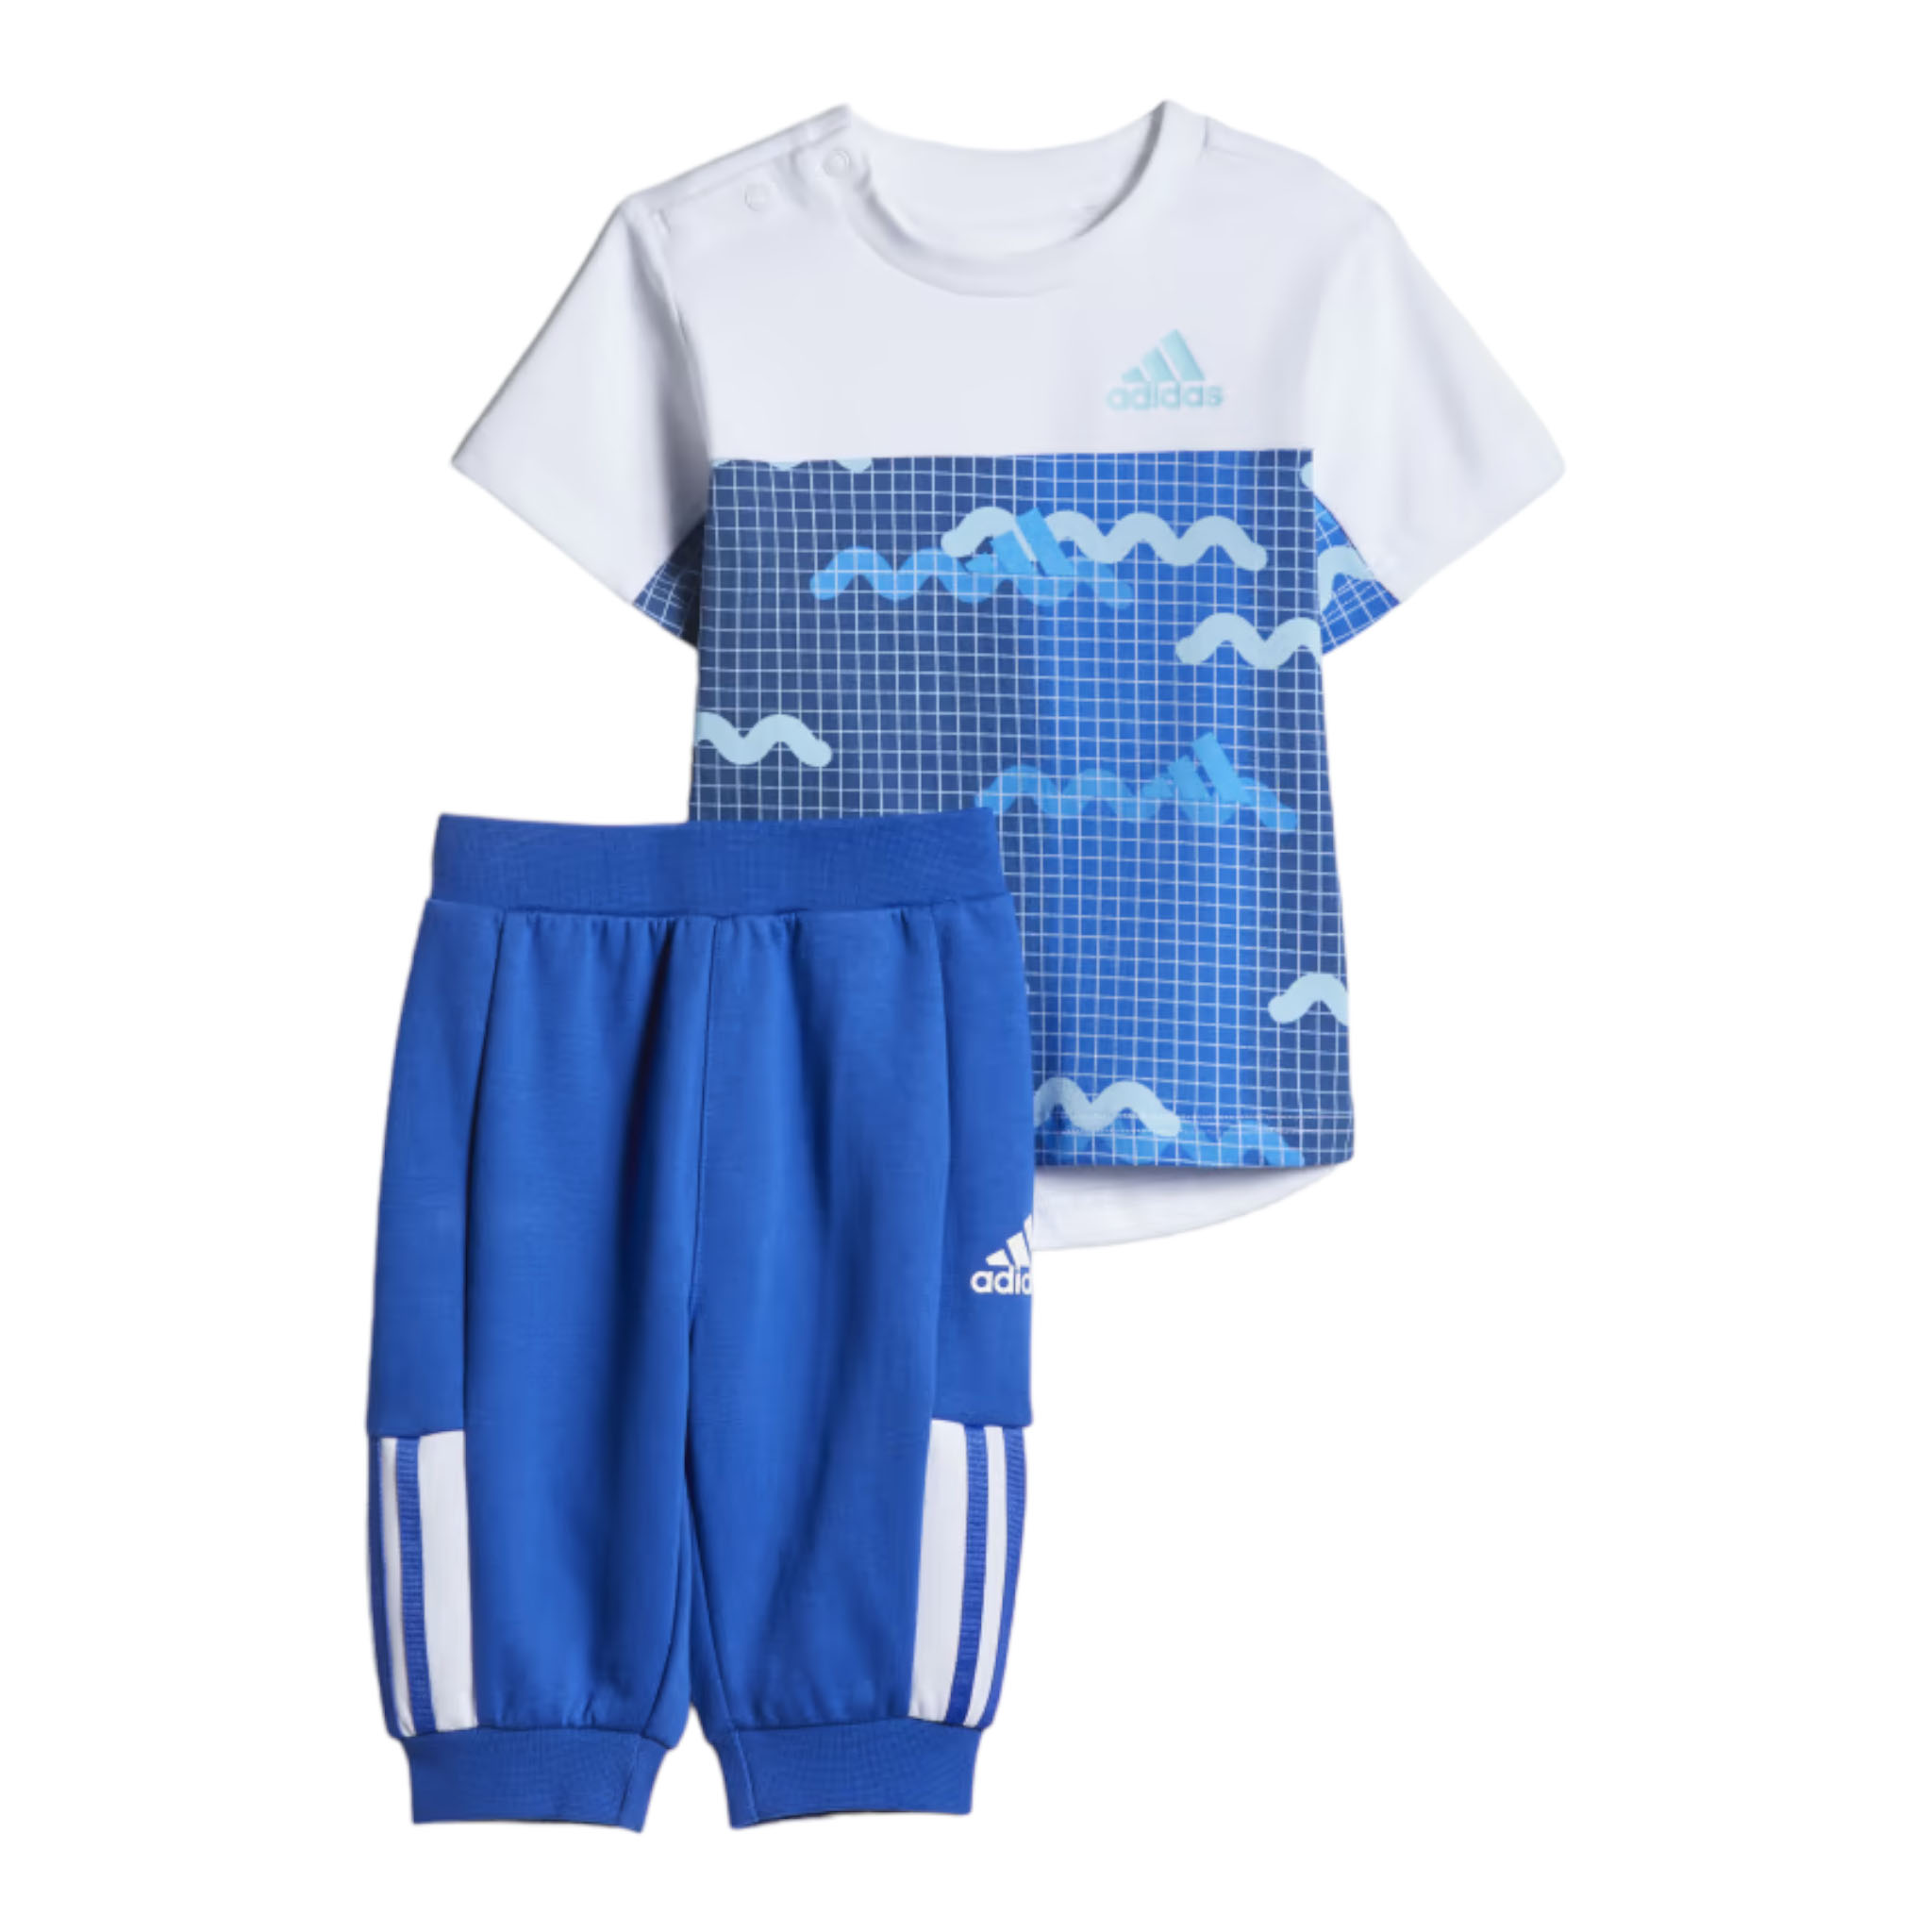 Спортивный костюм Adidas Graphic 3/4, белый/голубой костюм спортивный adidas размер 3 4y [mety] голубой белый